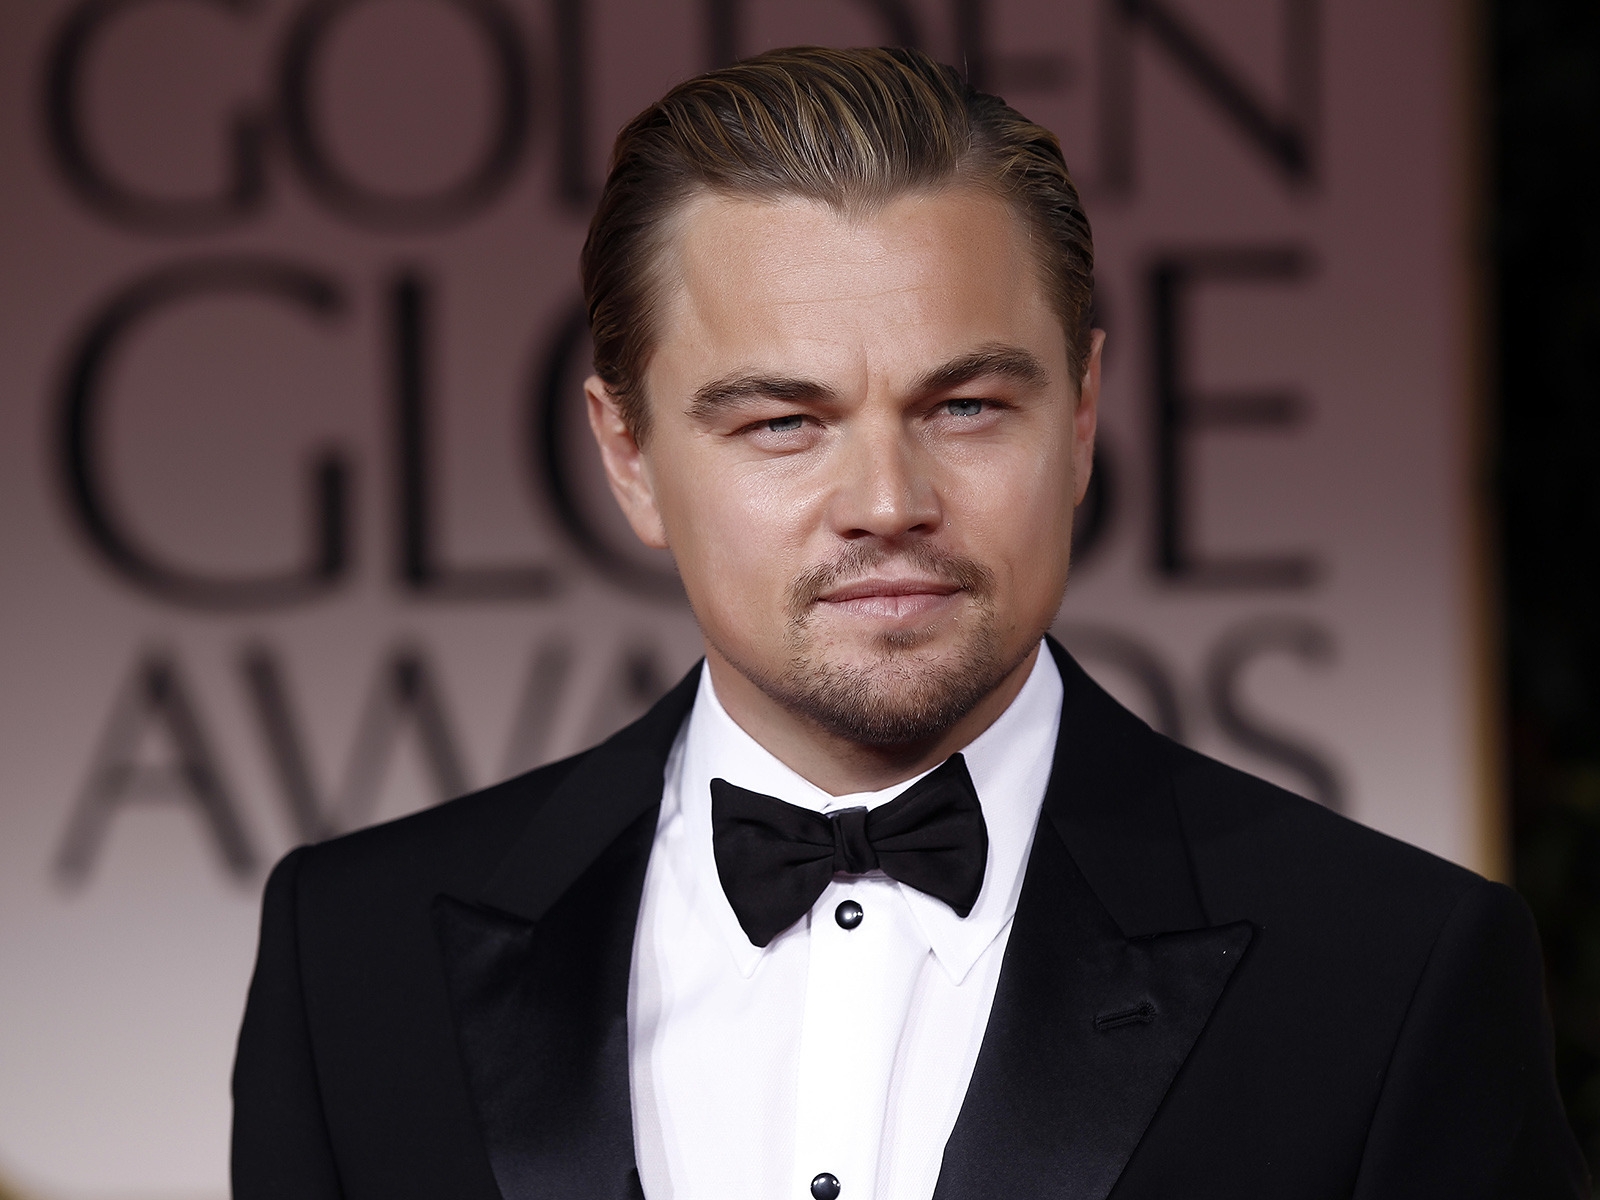 Leonardo DiCaprio in Tuxedo for 1600 x 1200 resolution